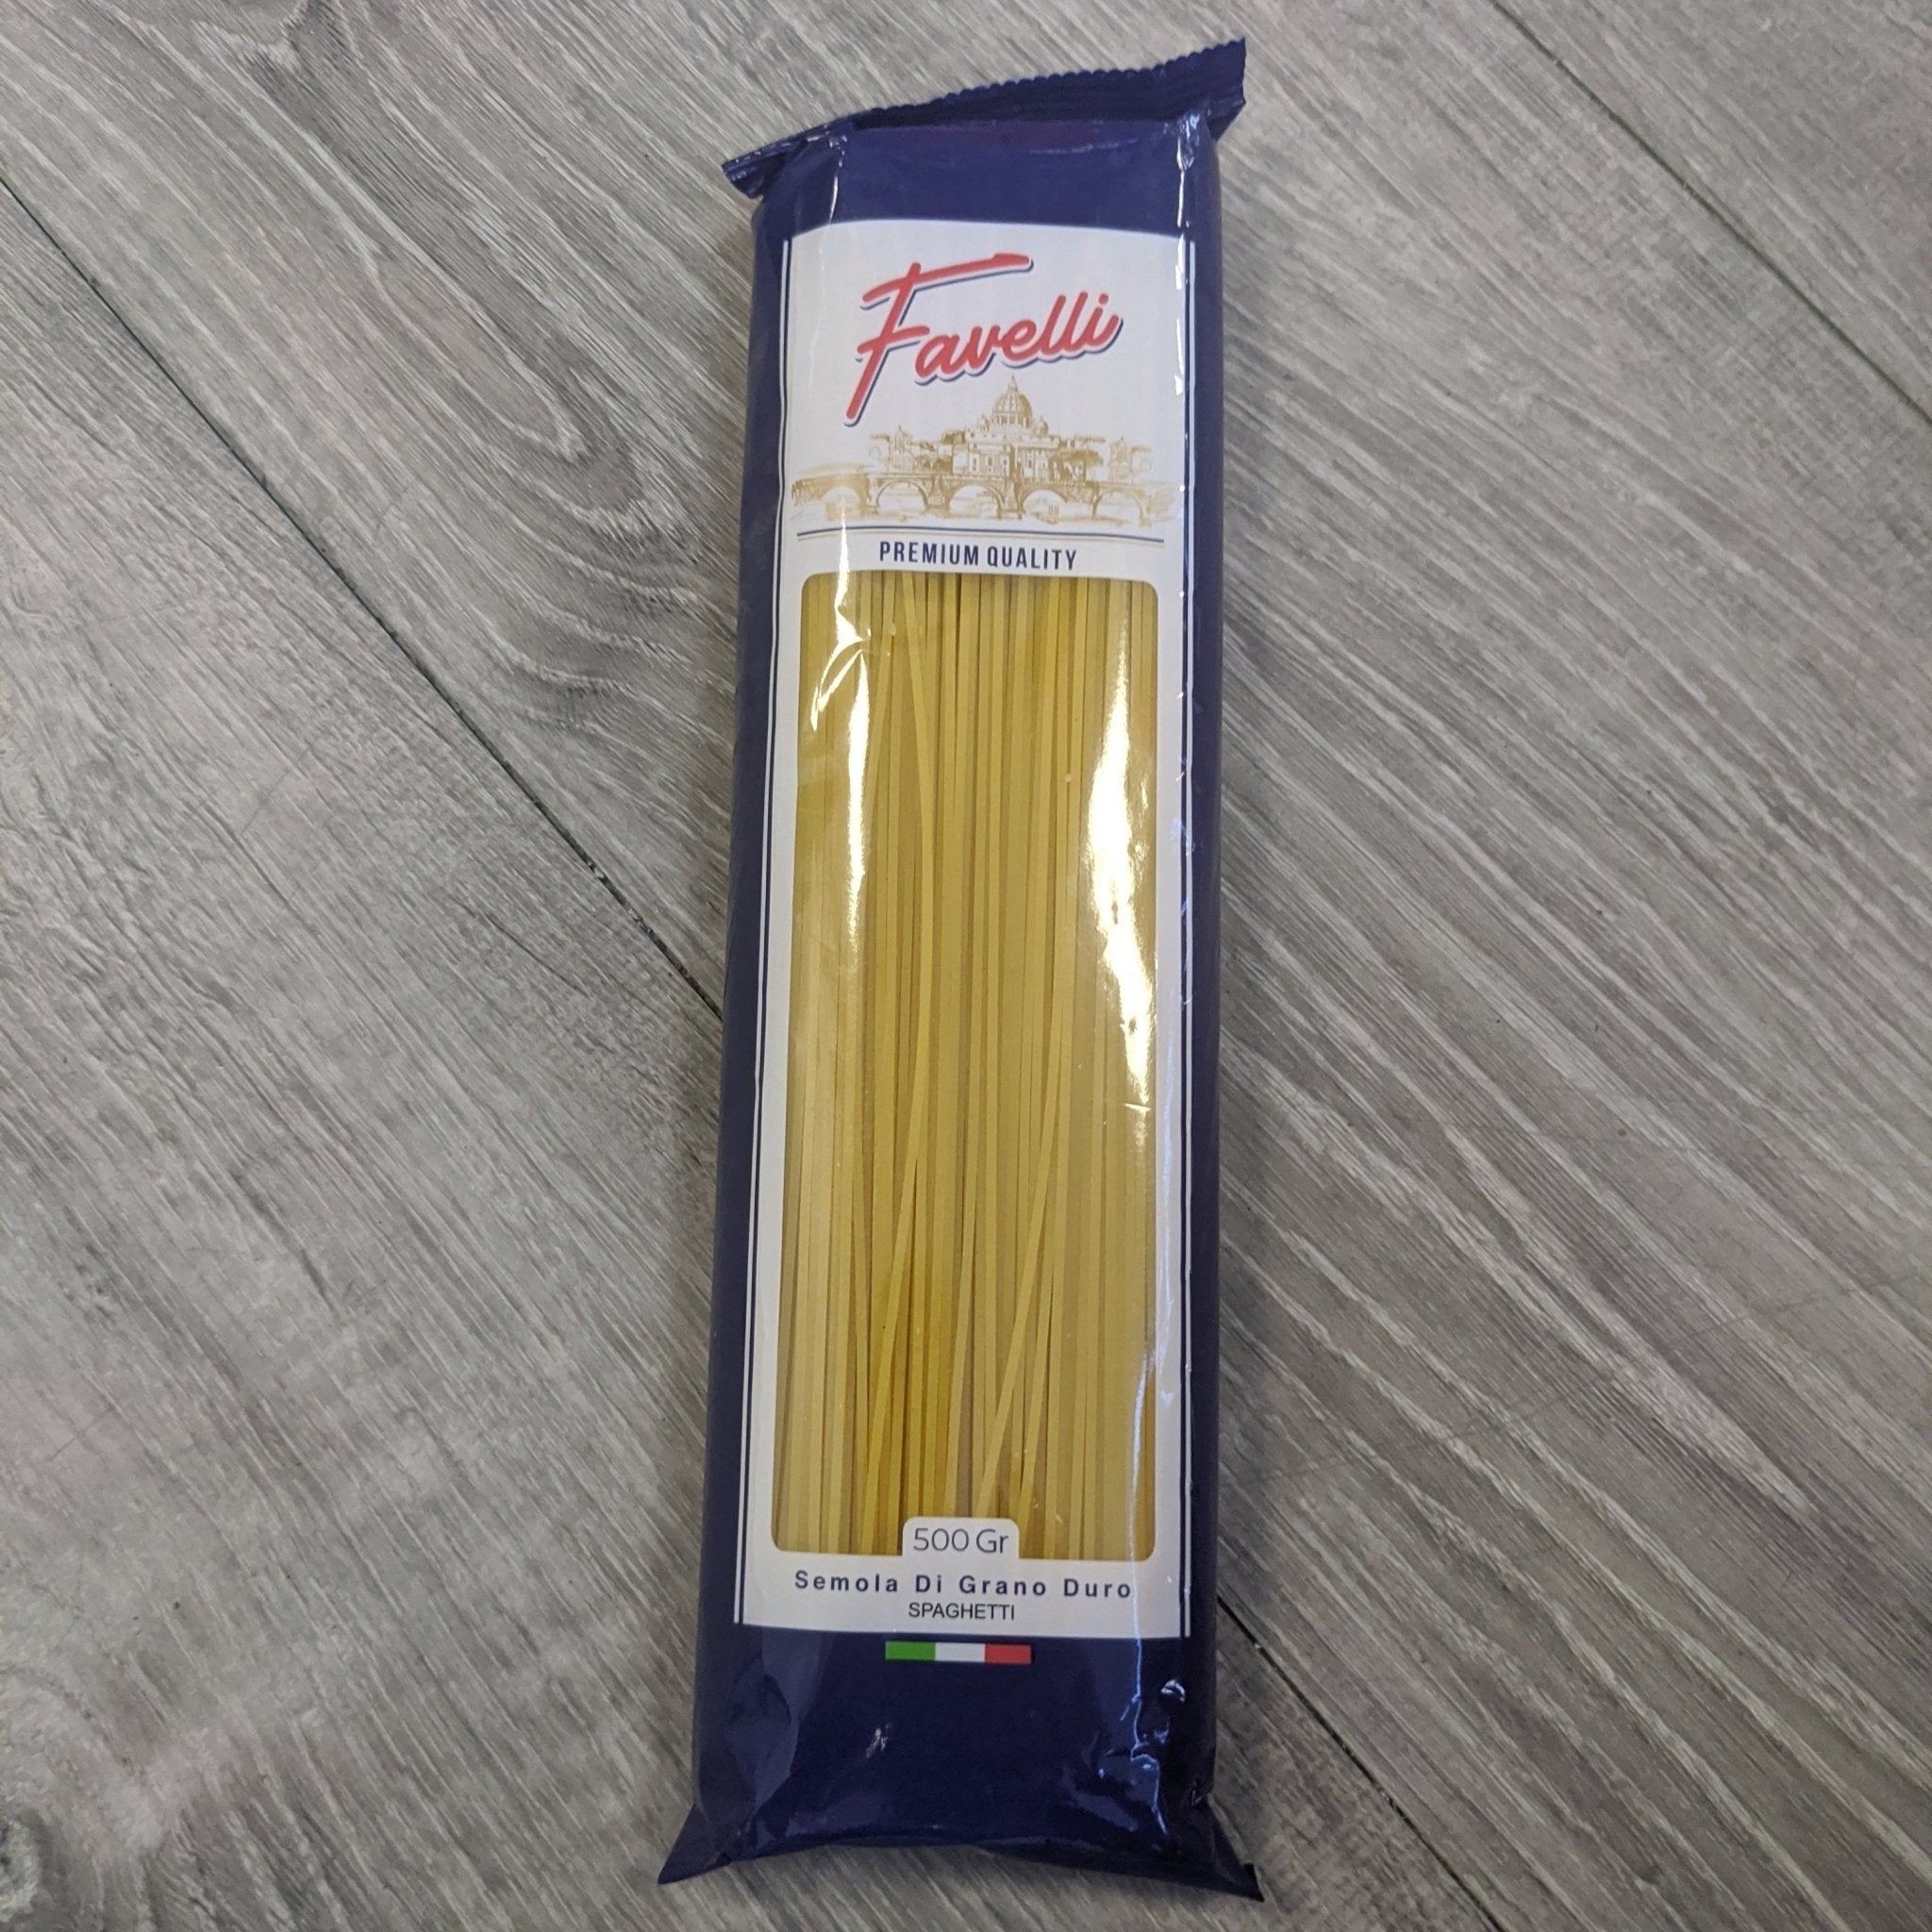 Favelli Spaghetti Pasta 500 Gr